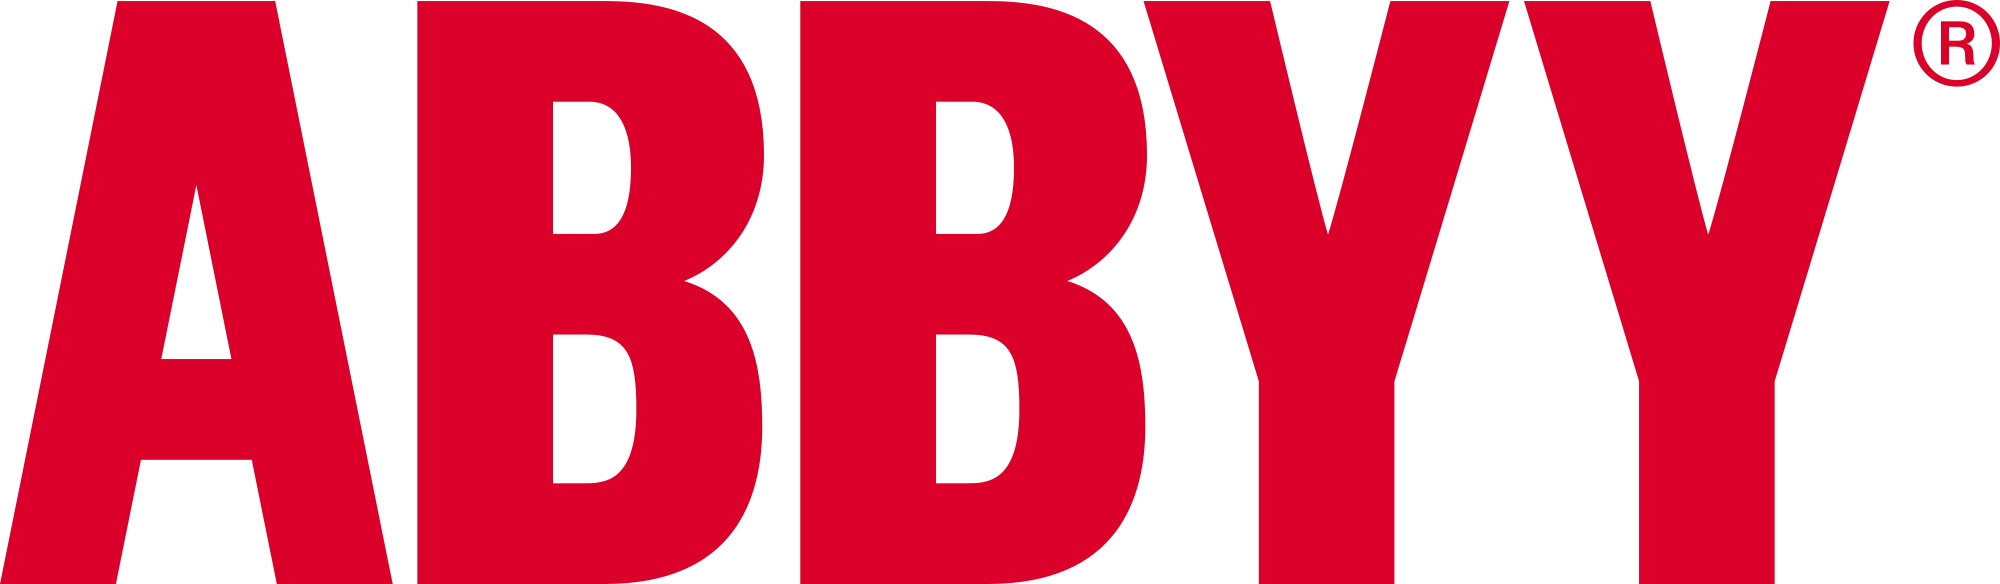 2000px-ABBYY_logo.svg